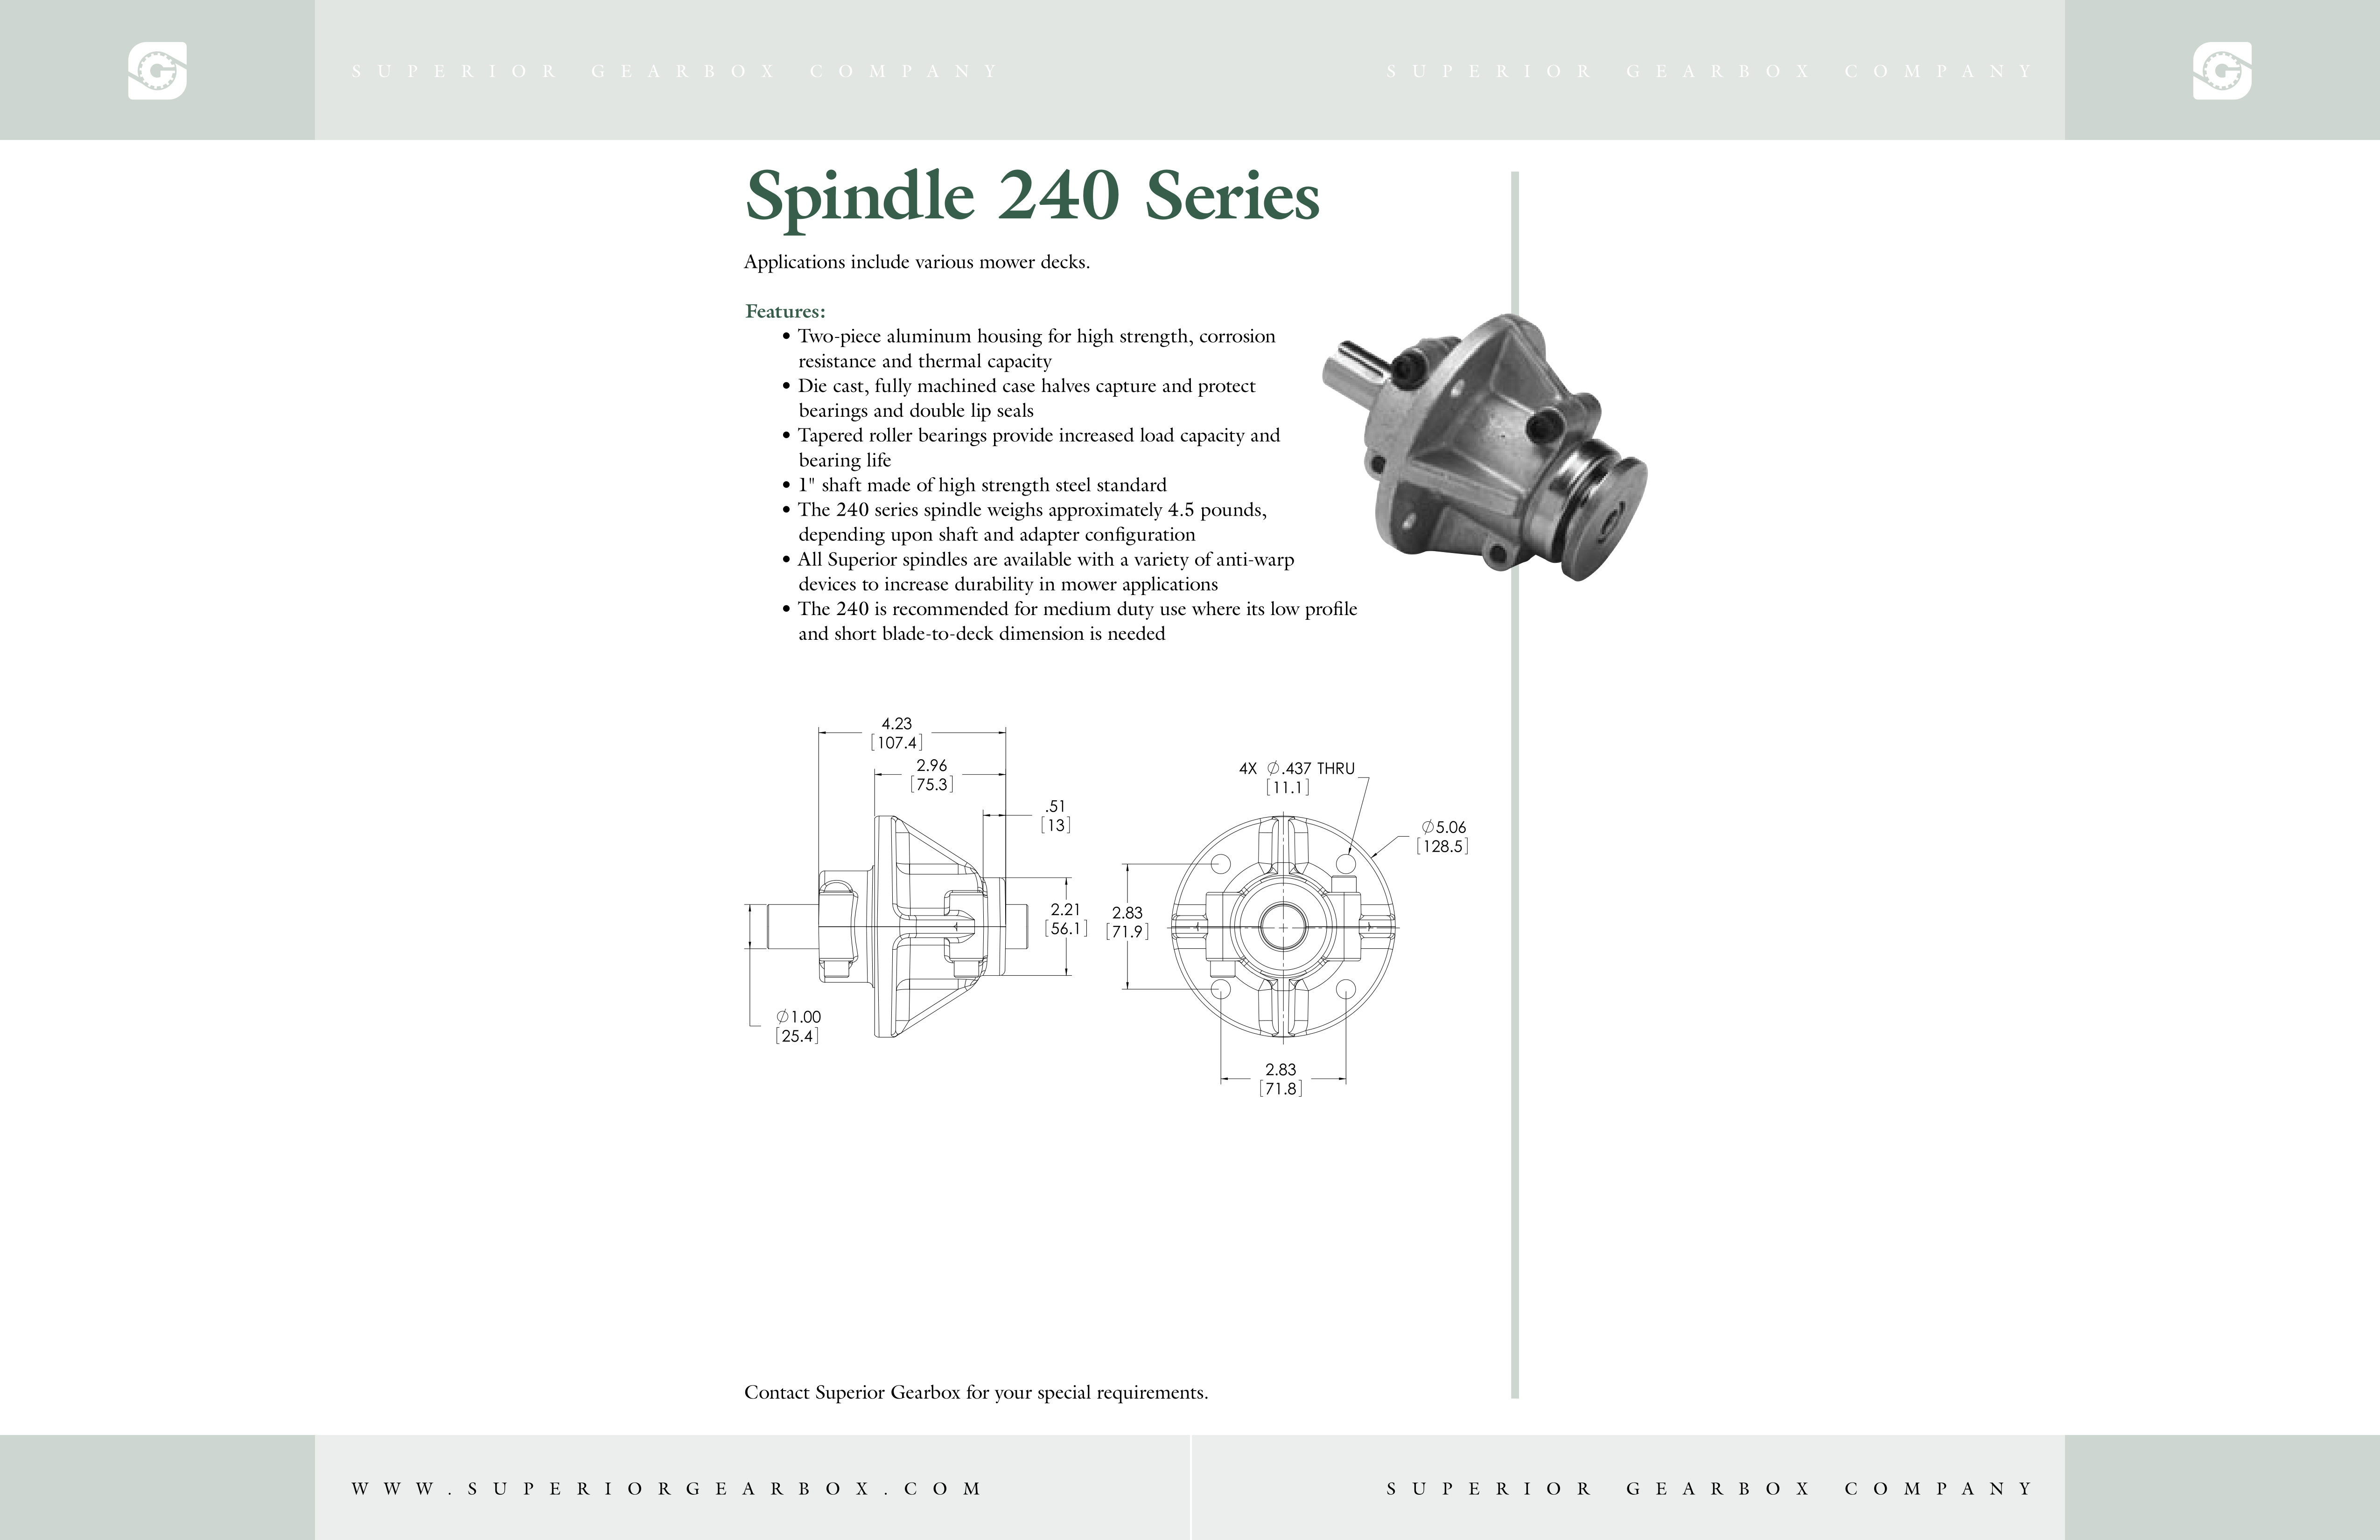 S240 Spindle Series Brochure Image